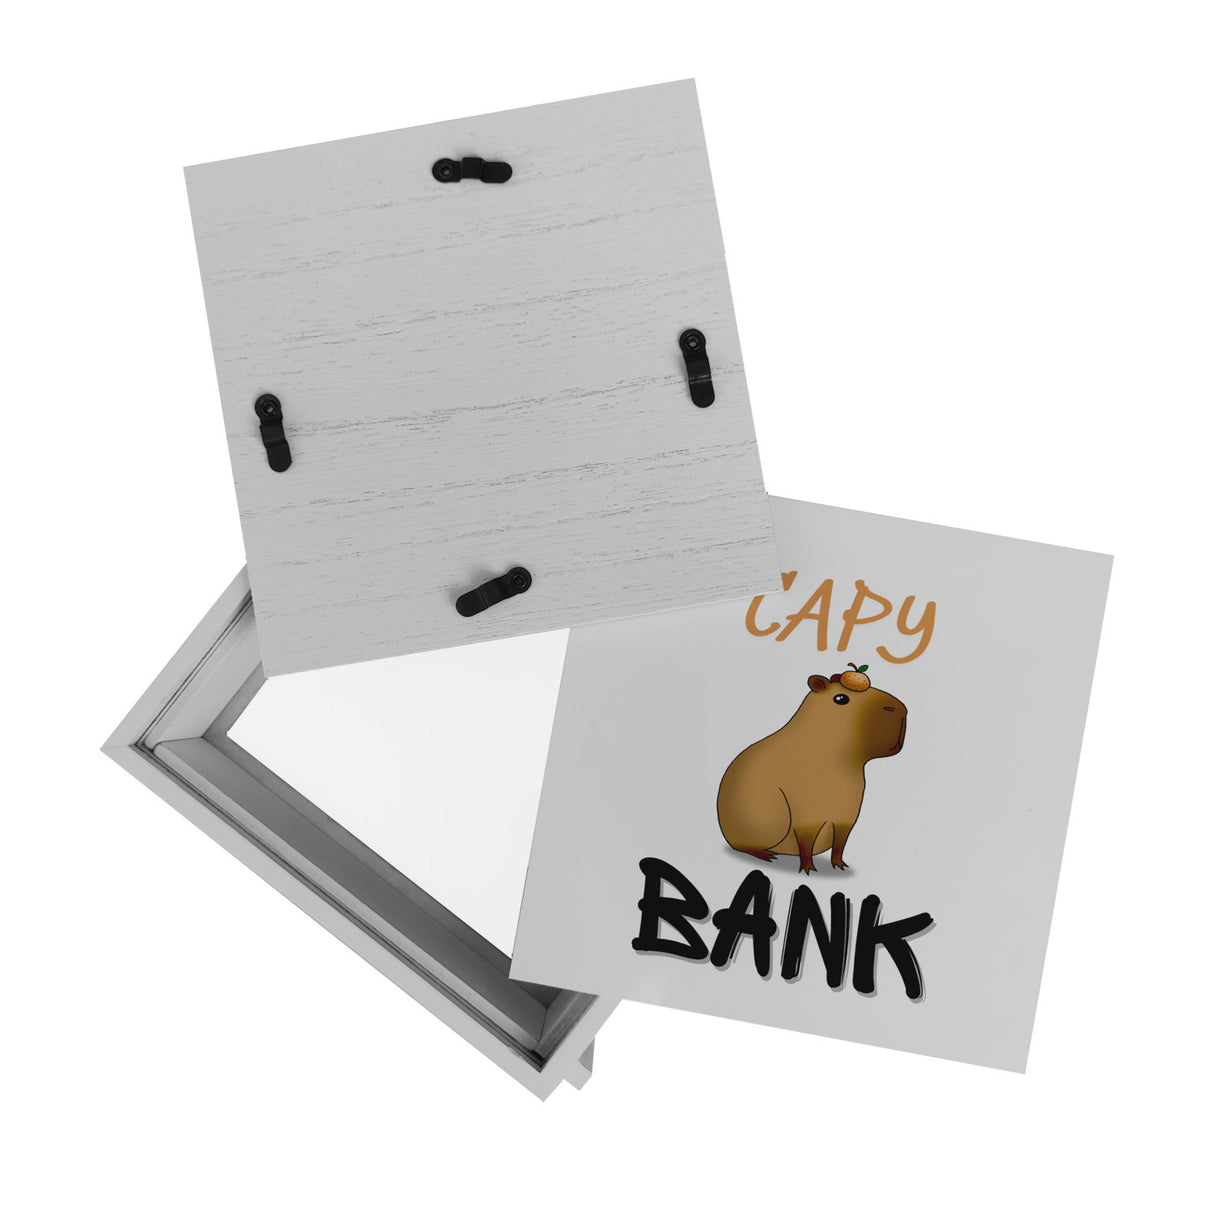 Capy Bank Spardose mit witzigem Capybara